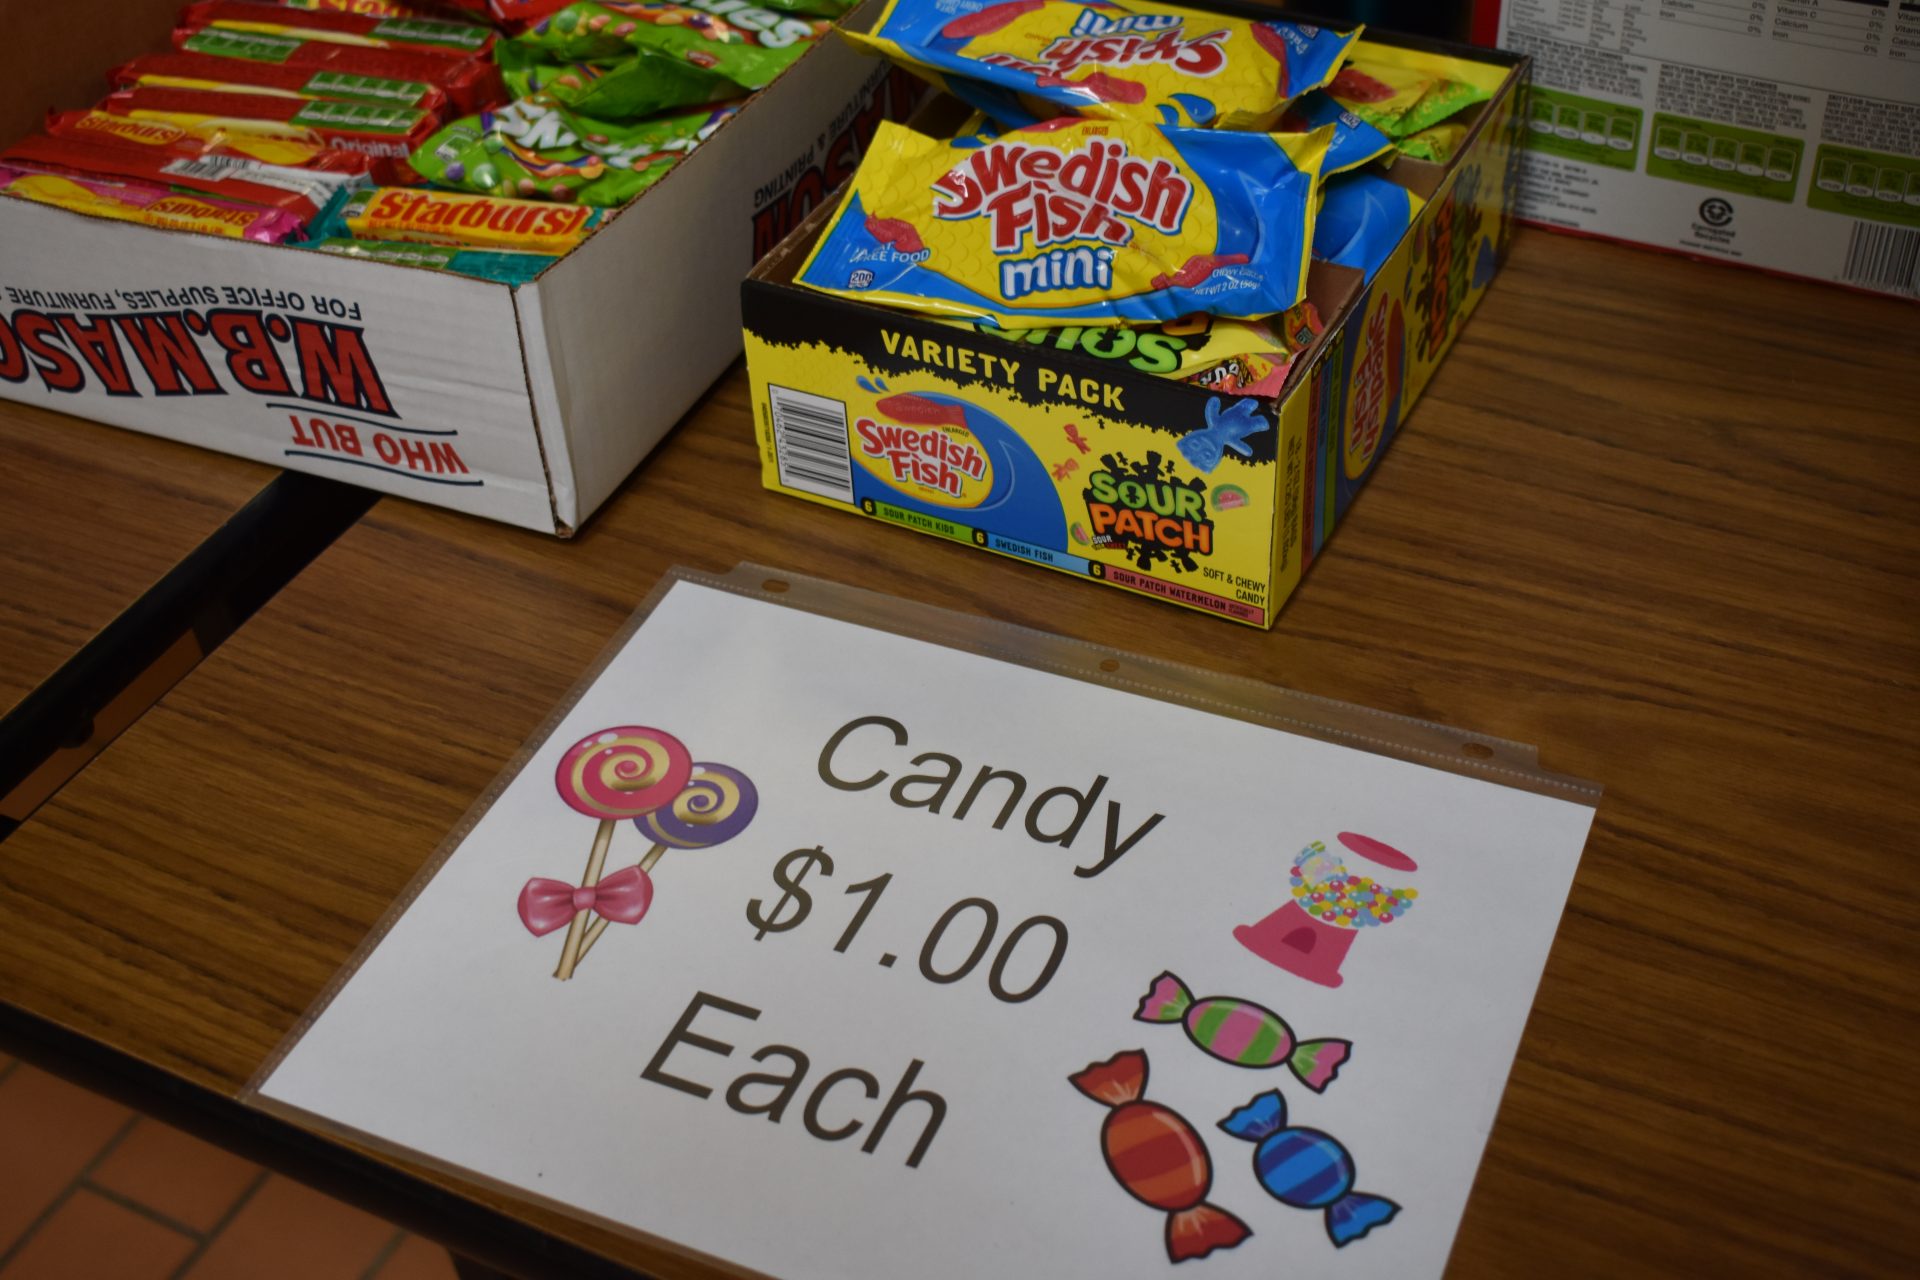 Candy $1.00 Each